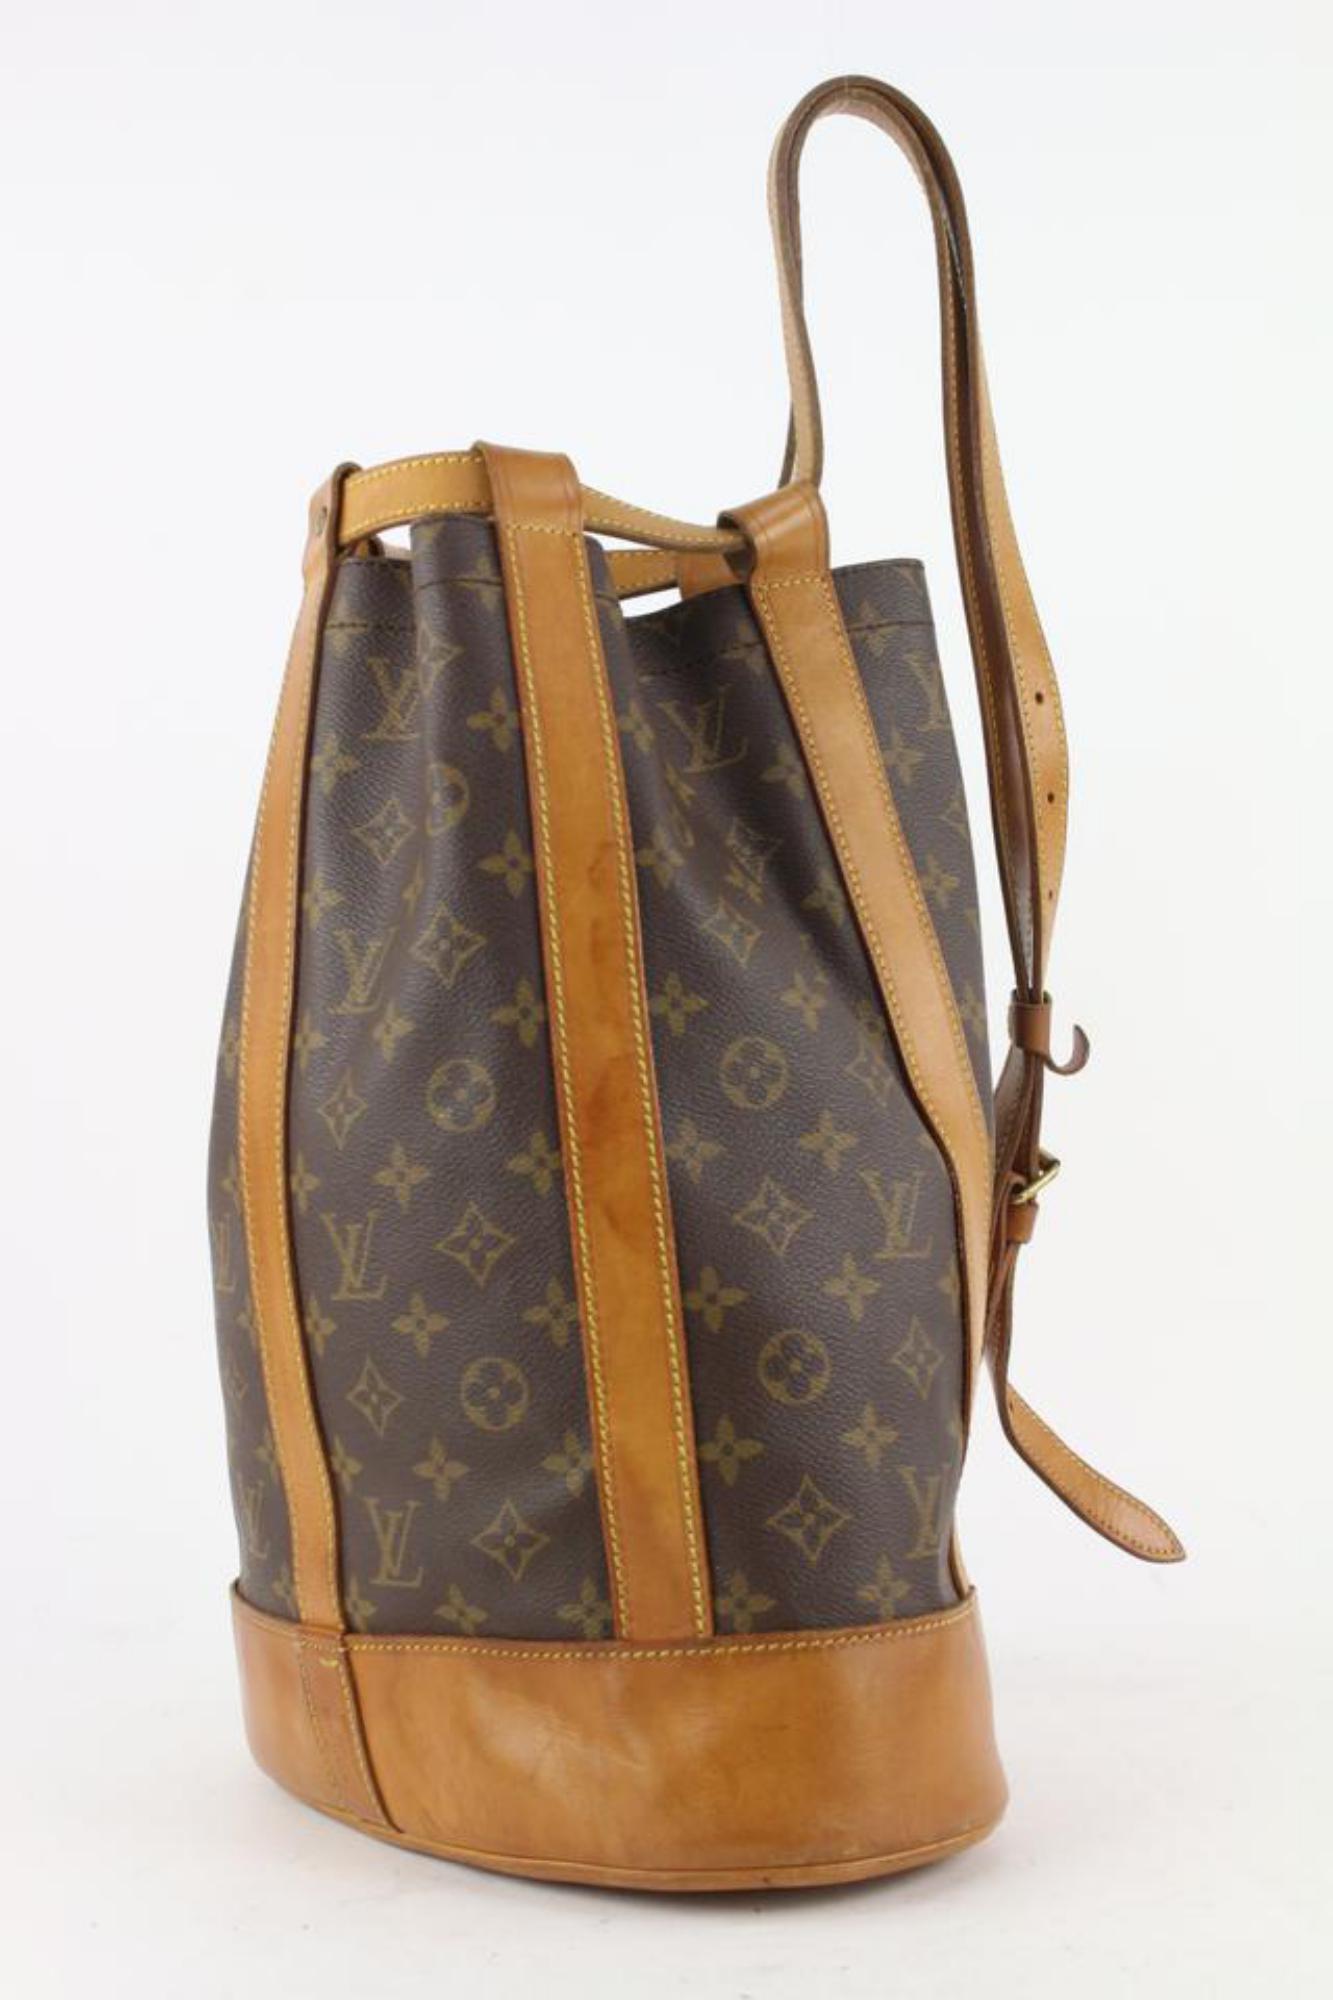 Louis Vuitton Monogram Randonnee PM Drawstring Hobo Sling Backpack Bag 5LZ1109
Date Code/Serial Number: AS 1925
Made In: France
Measurements: Length: 12 